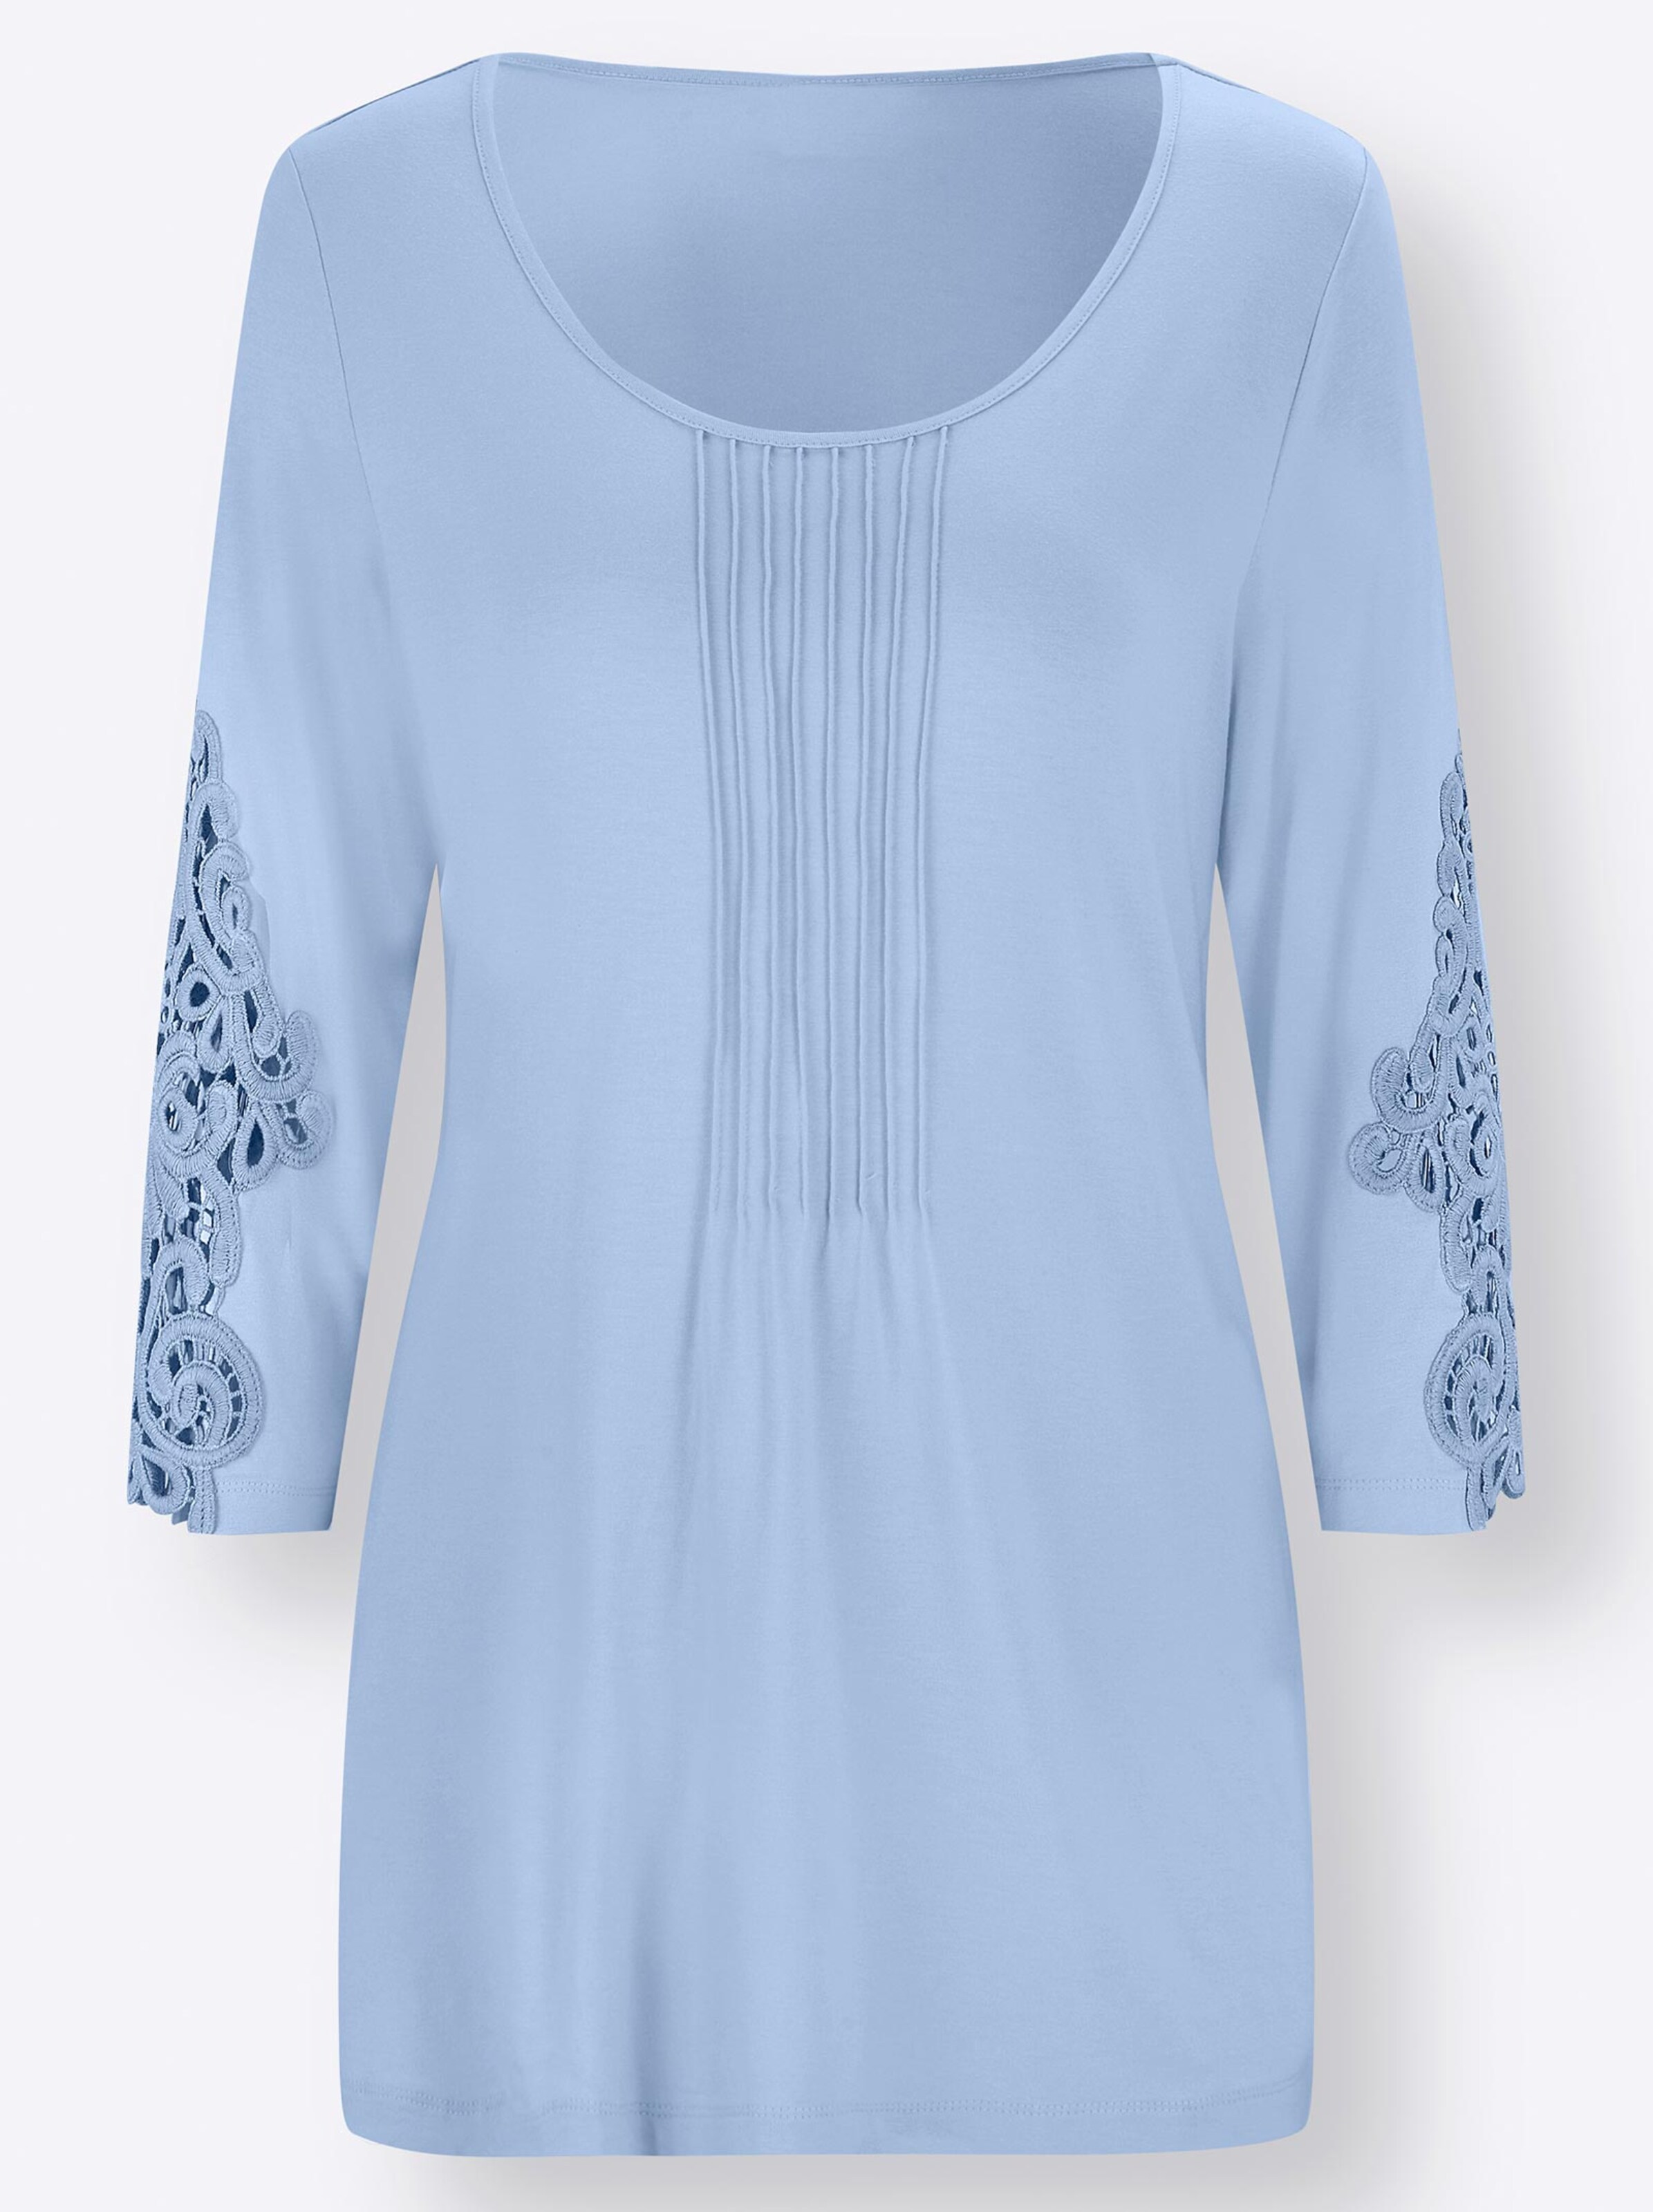 Damenmode Shirts 3/4-Arm-Shirt in eisblau 